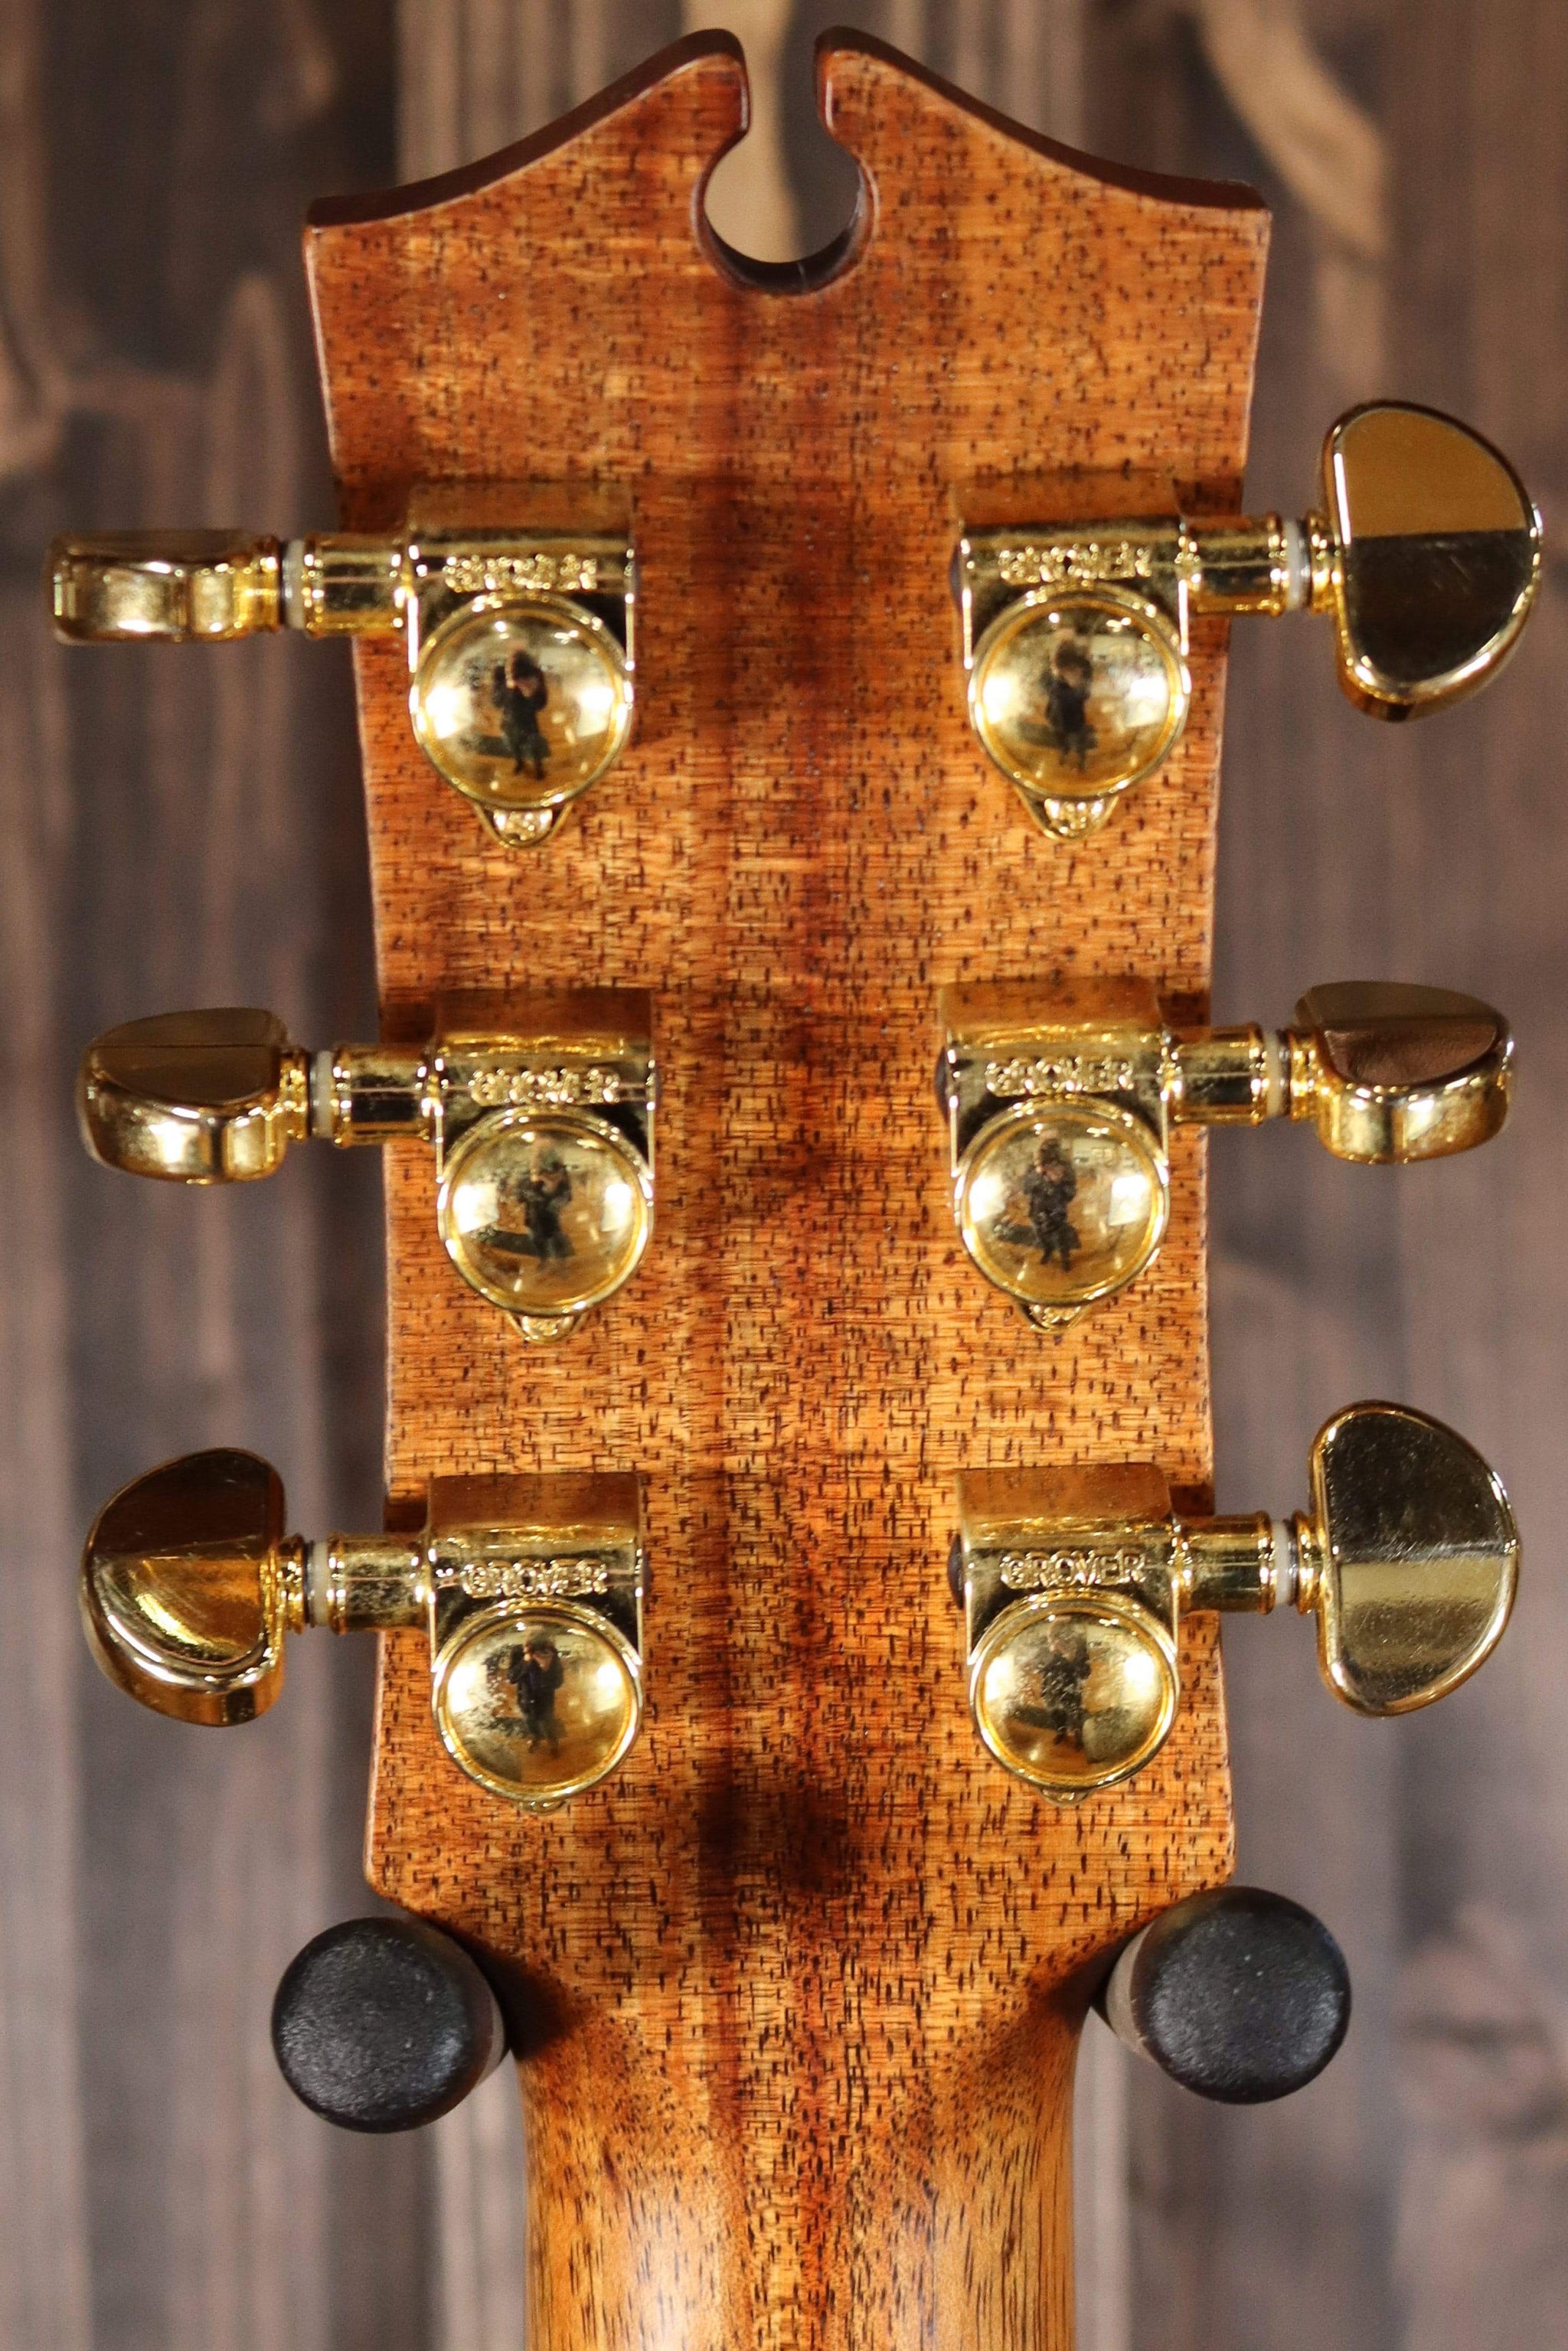 Maton Guitars EA808 Australian 2020 - 14694 - Artisan Guitars